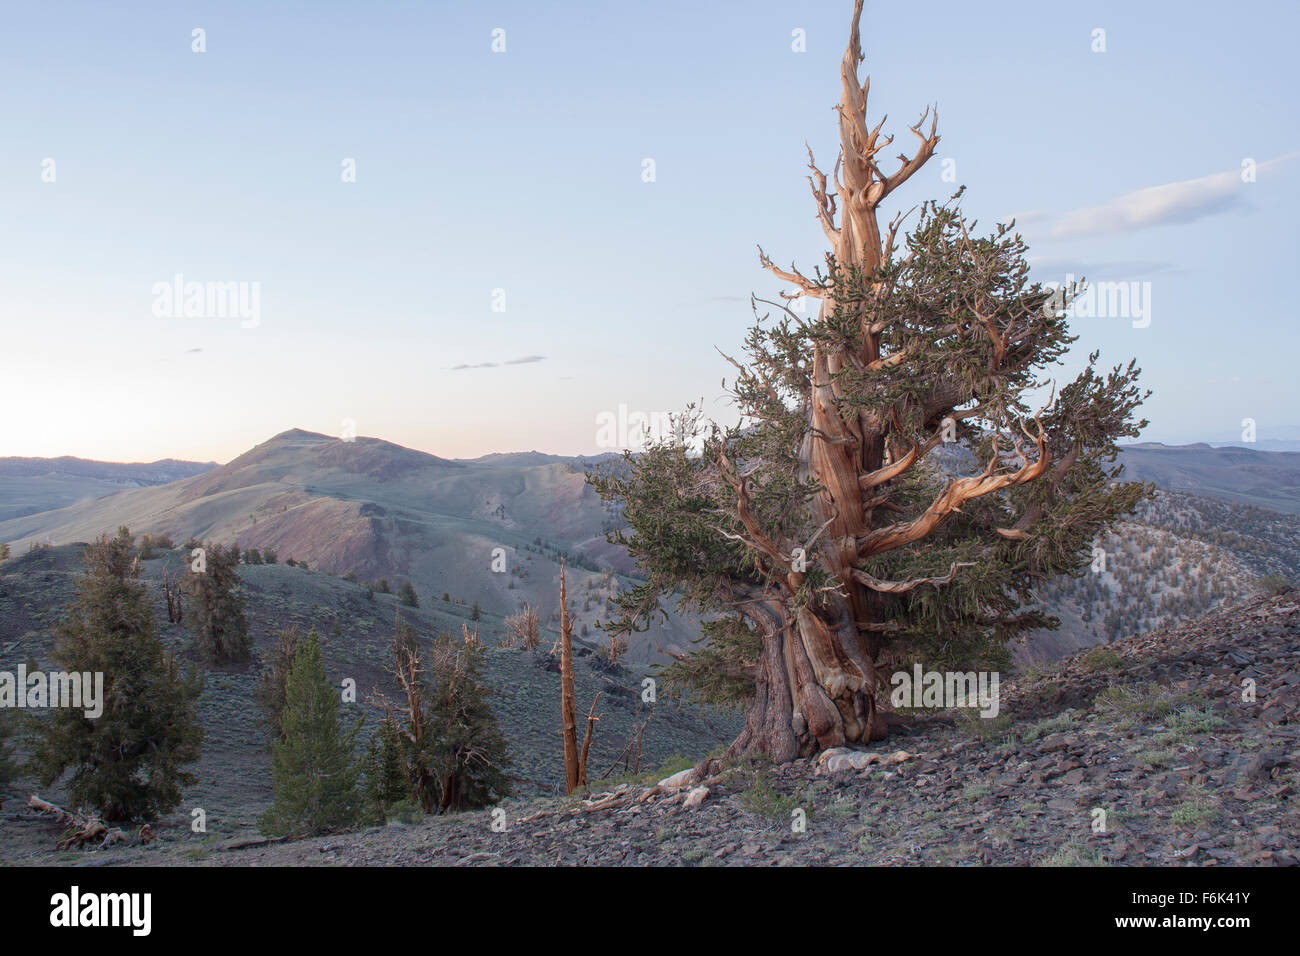 Ancient bristlecone pine tree. Ancient Bristlecone Pine Forest, California, USA. Stock Photo